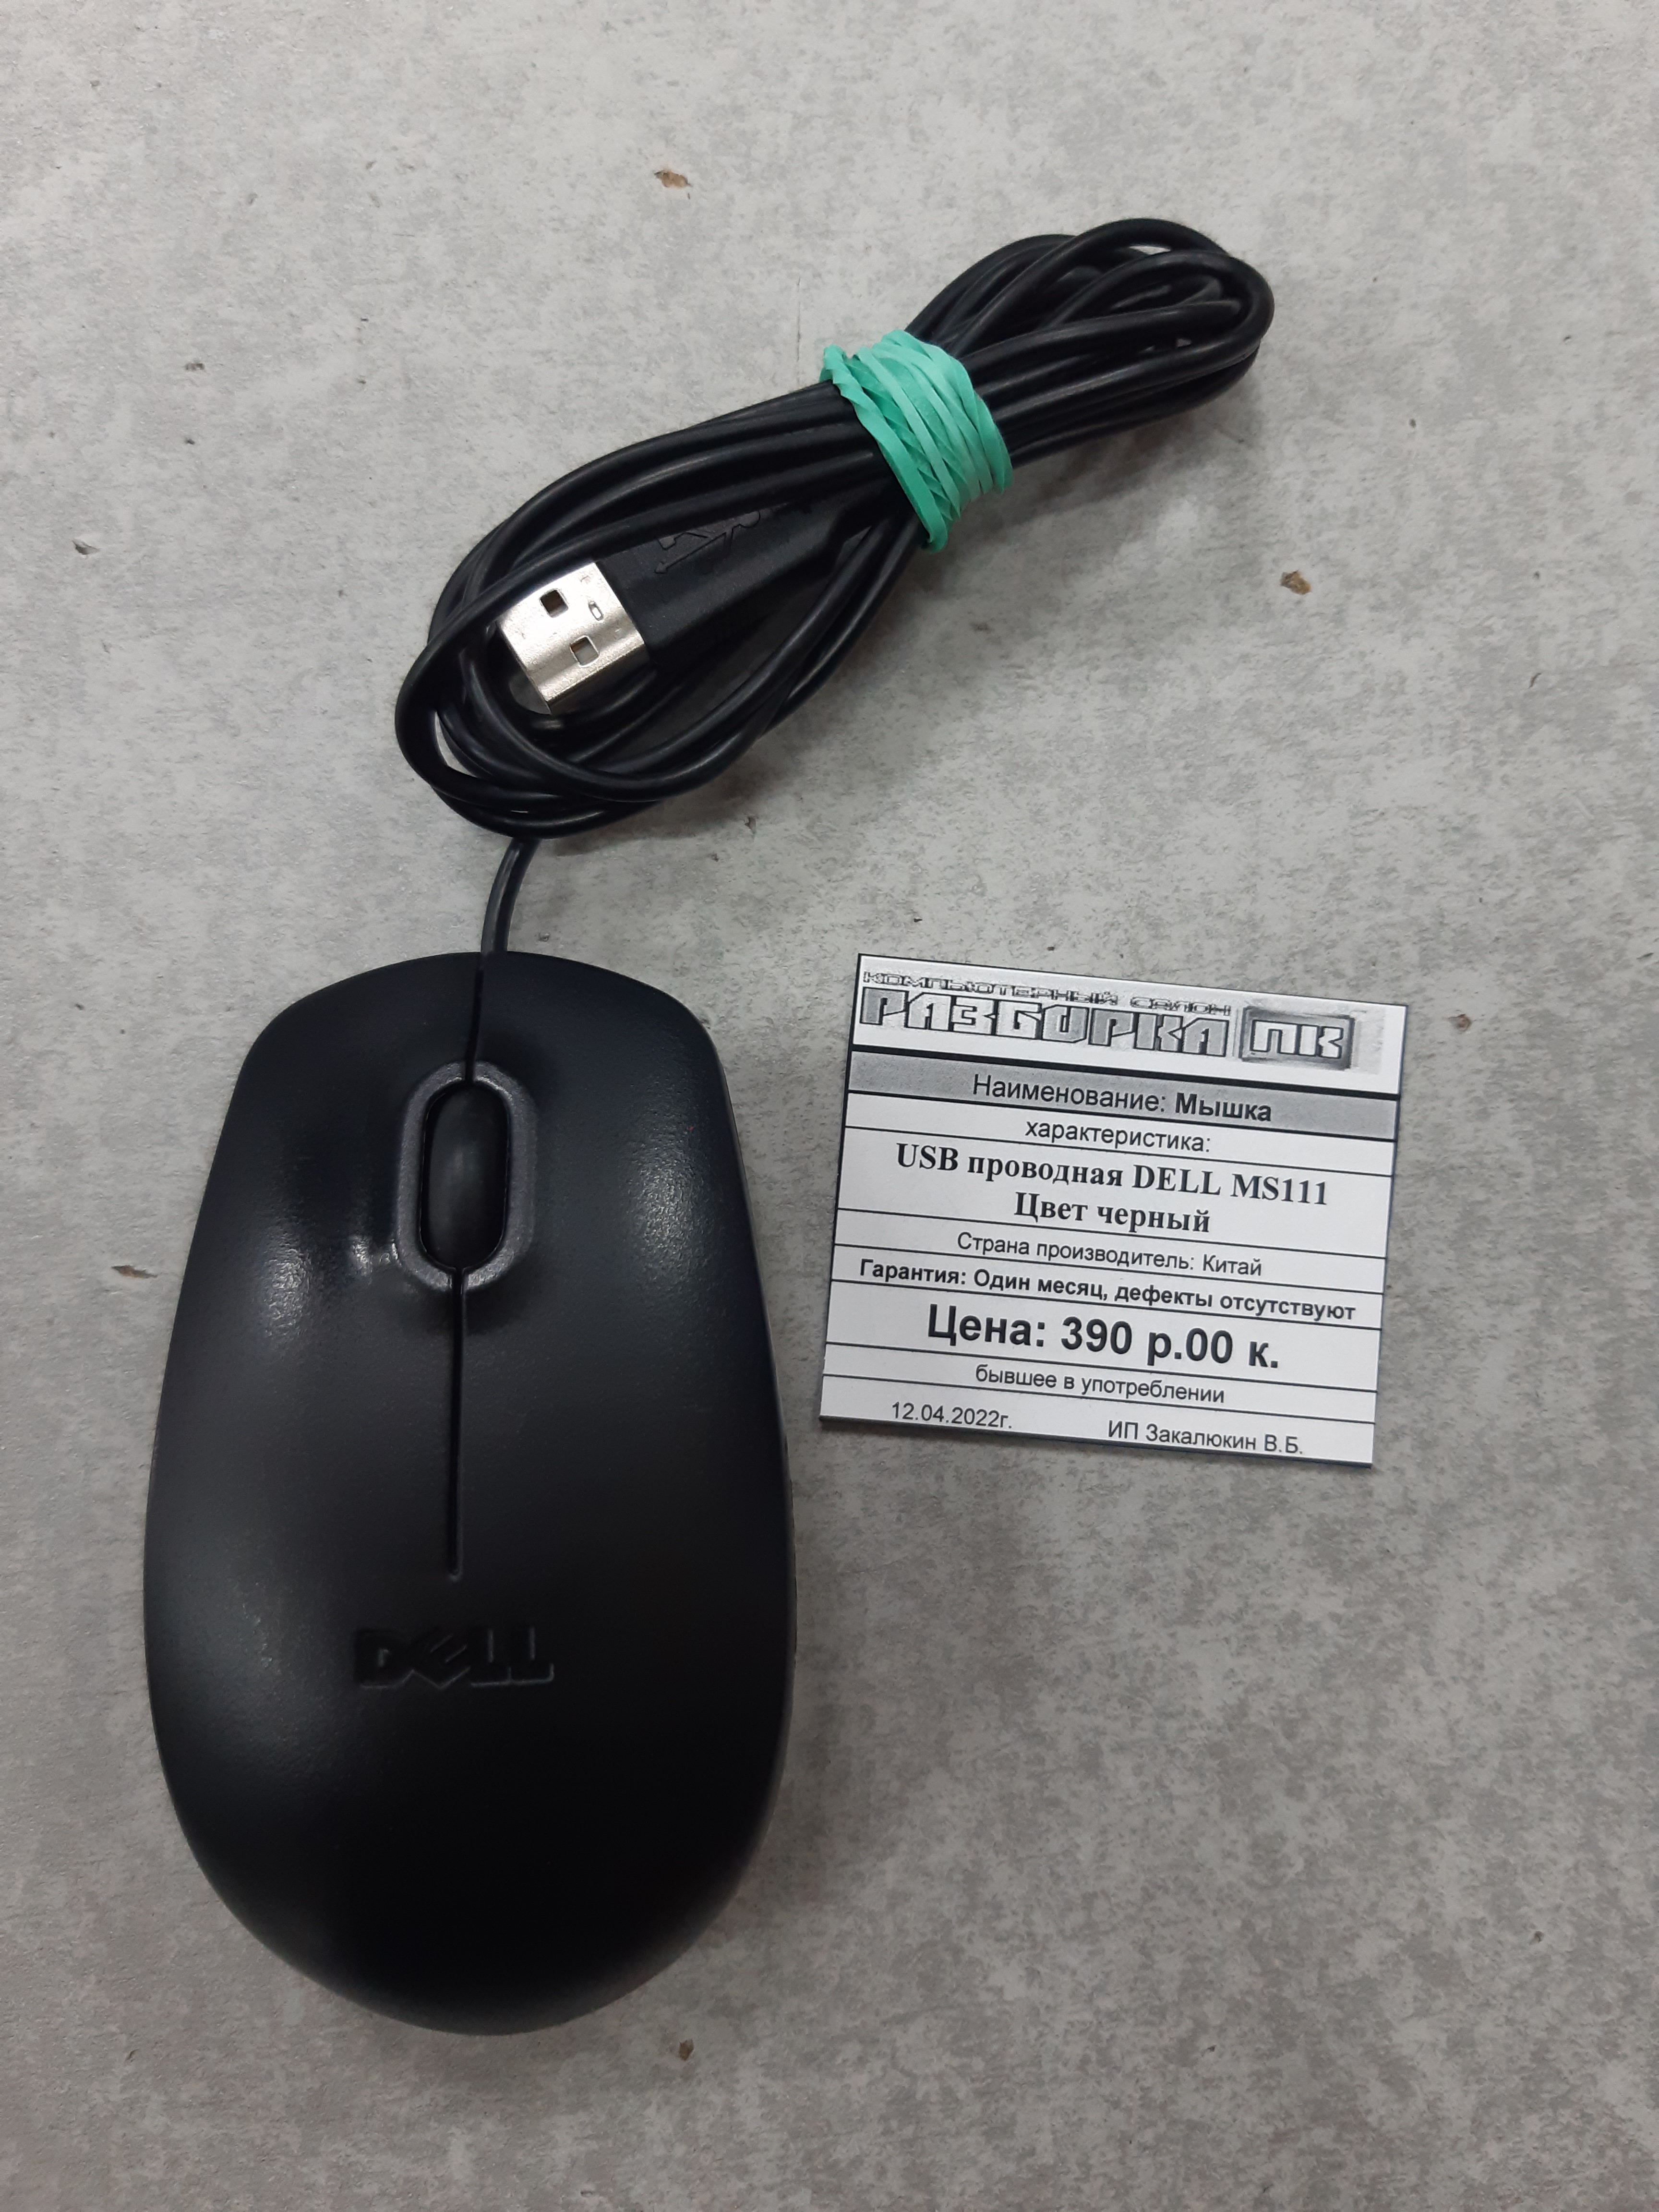 Мышка USB проводная DELL MS111